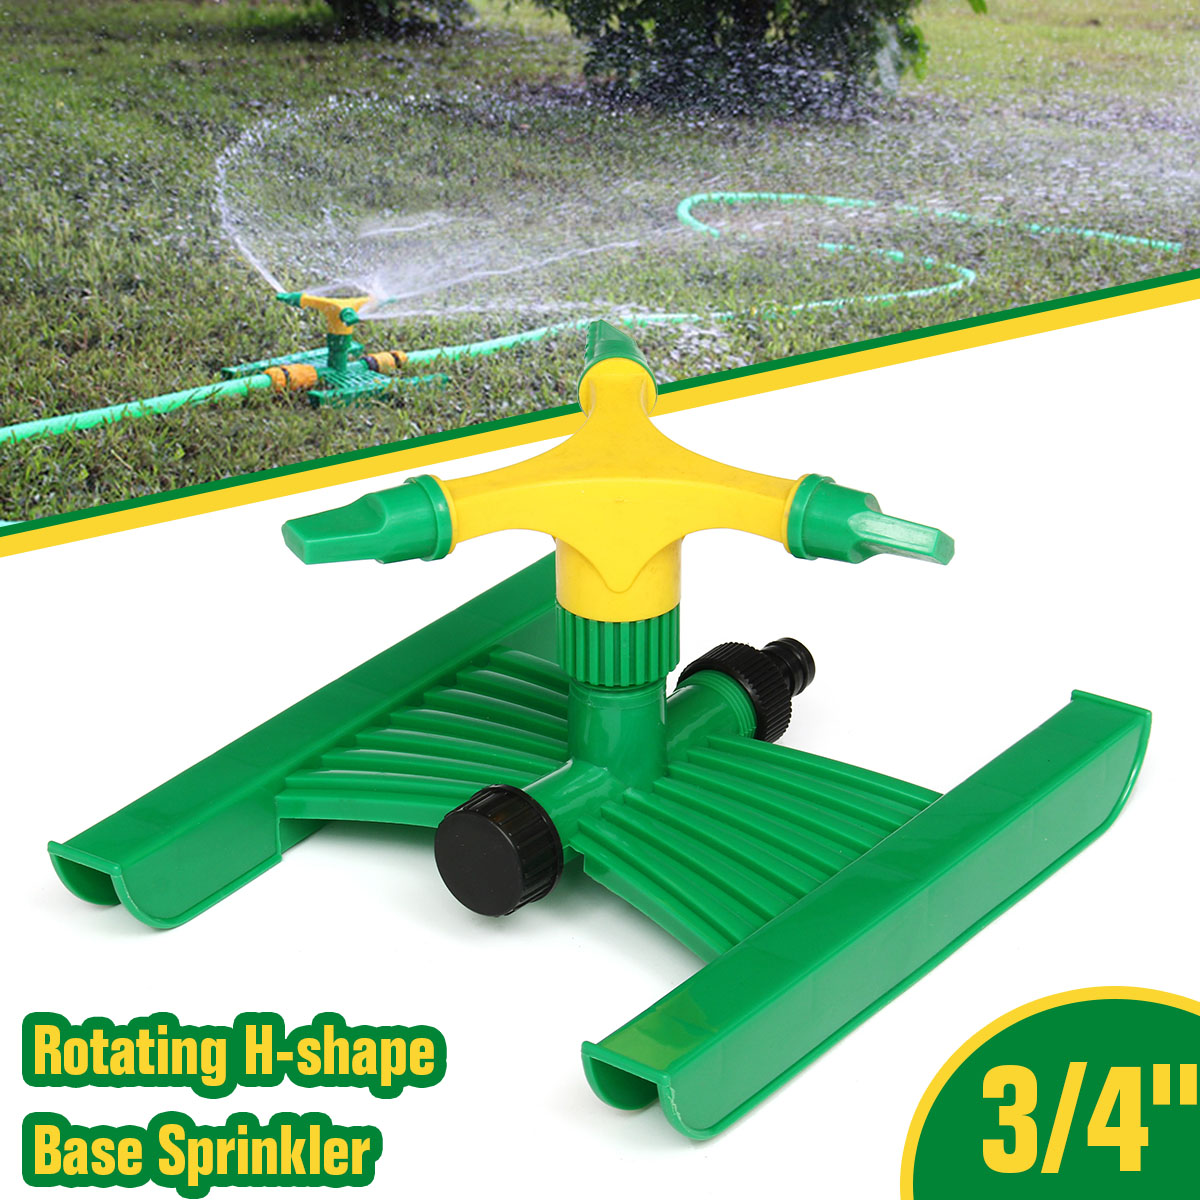 Rotating-Impulse-Sprinkler-Garden-Lawn-Grass-Watering-System-Water-Hose-Sprayer-1478934-1